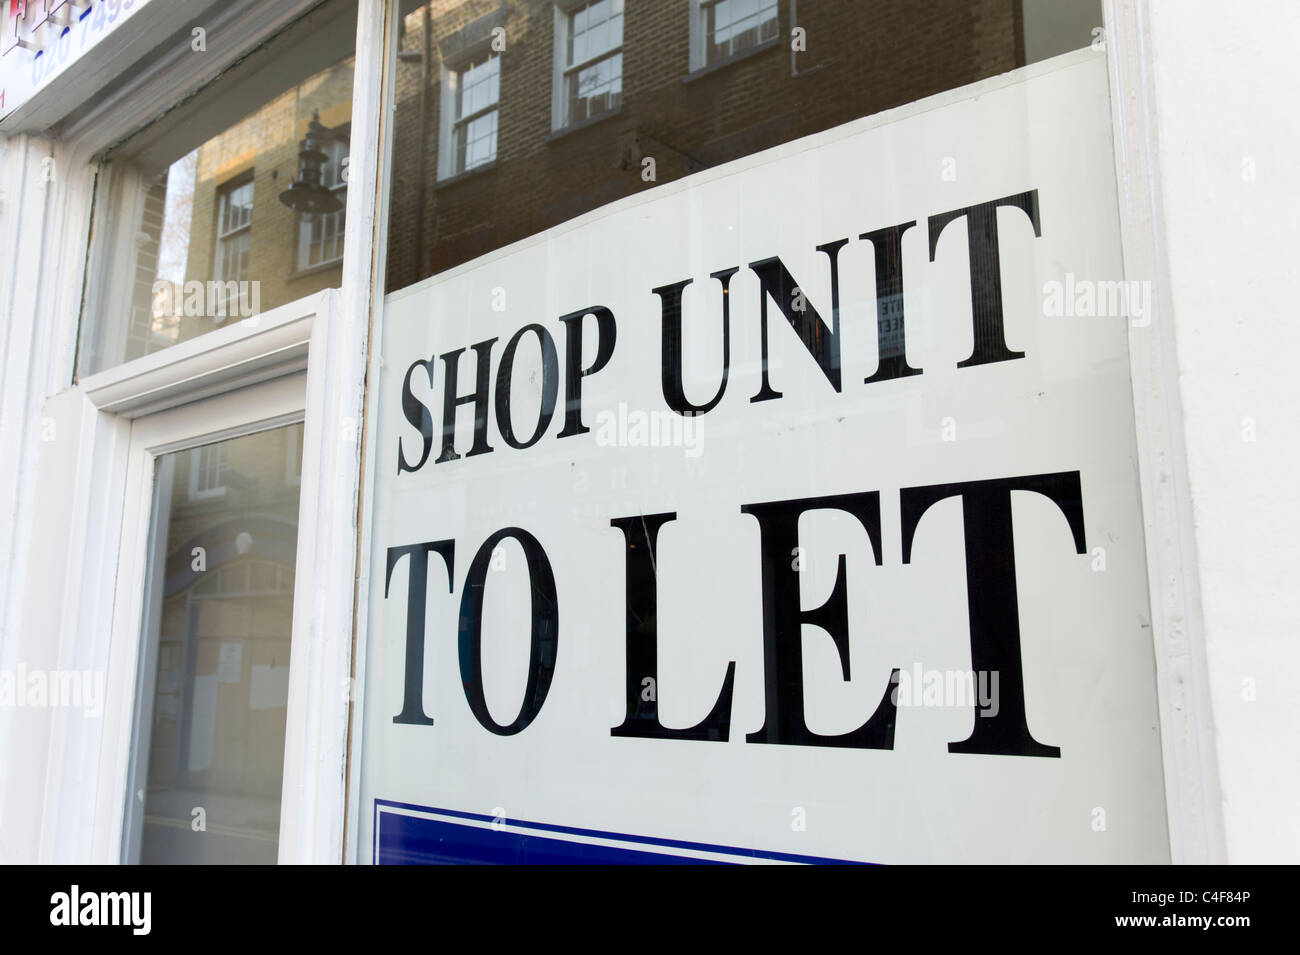 Shop unit to let, London, UK Stock Photo